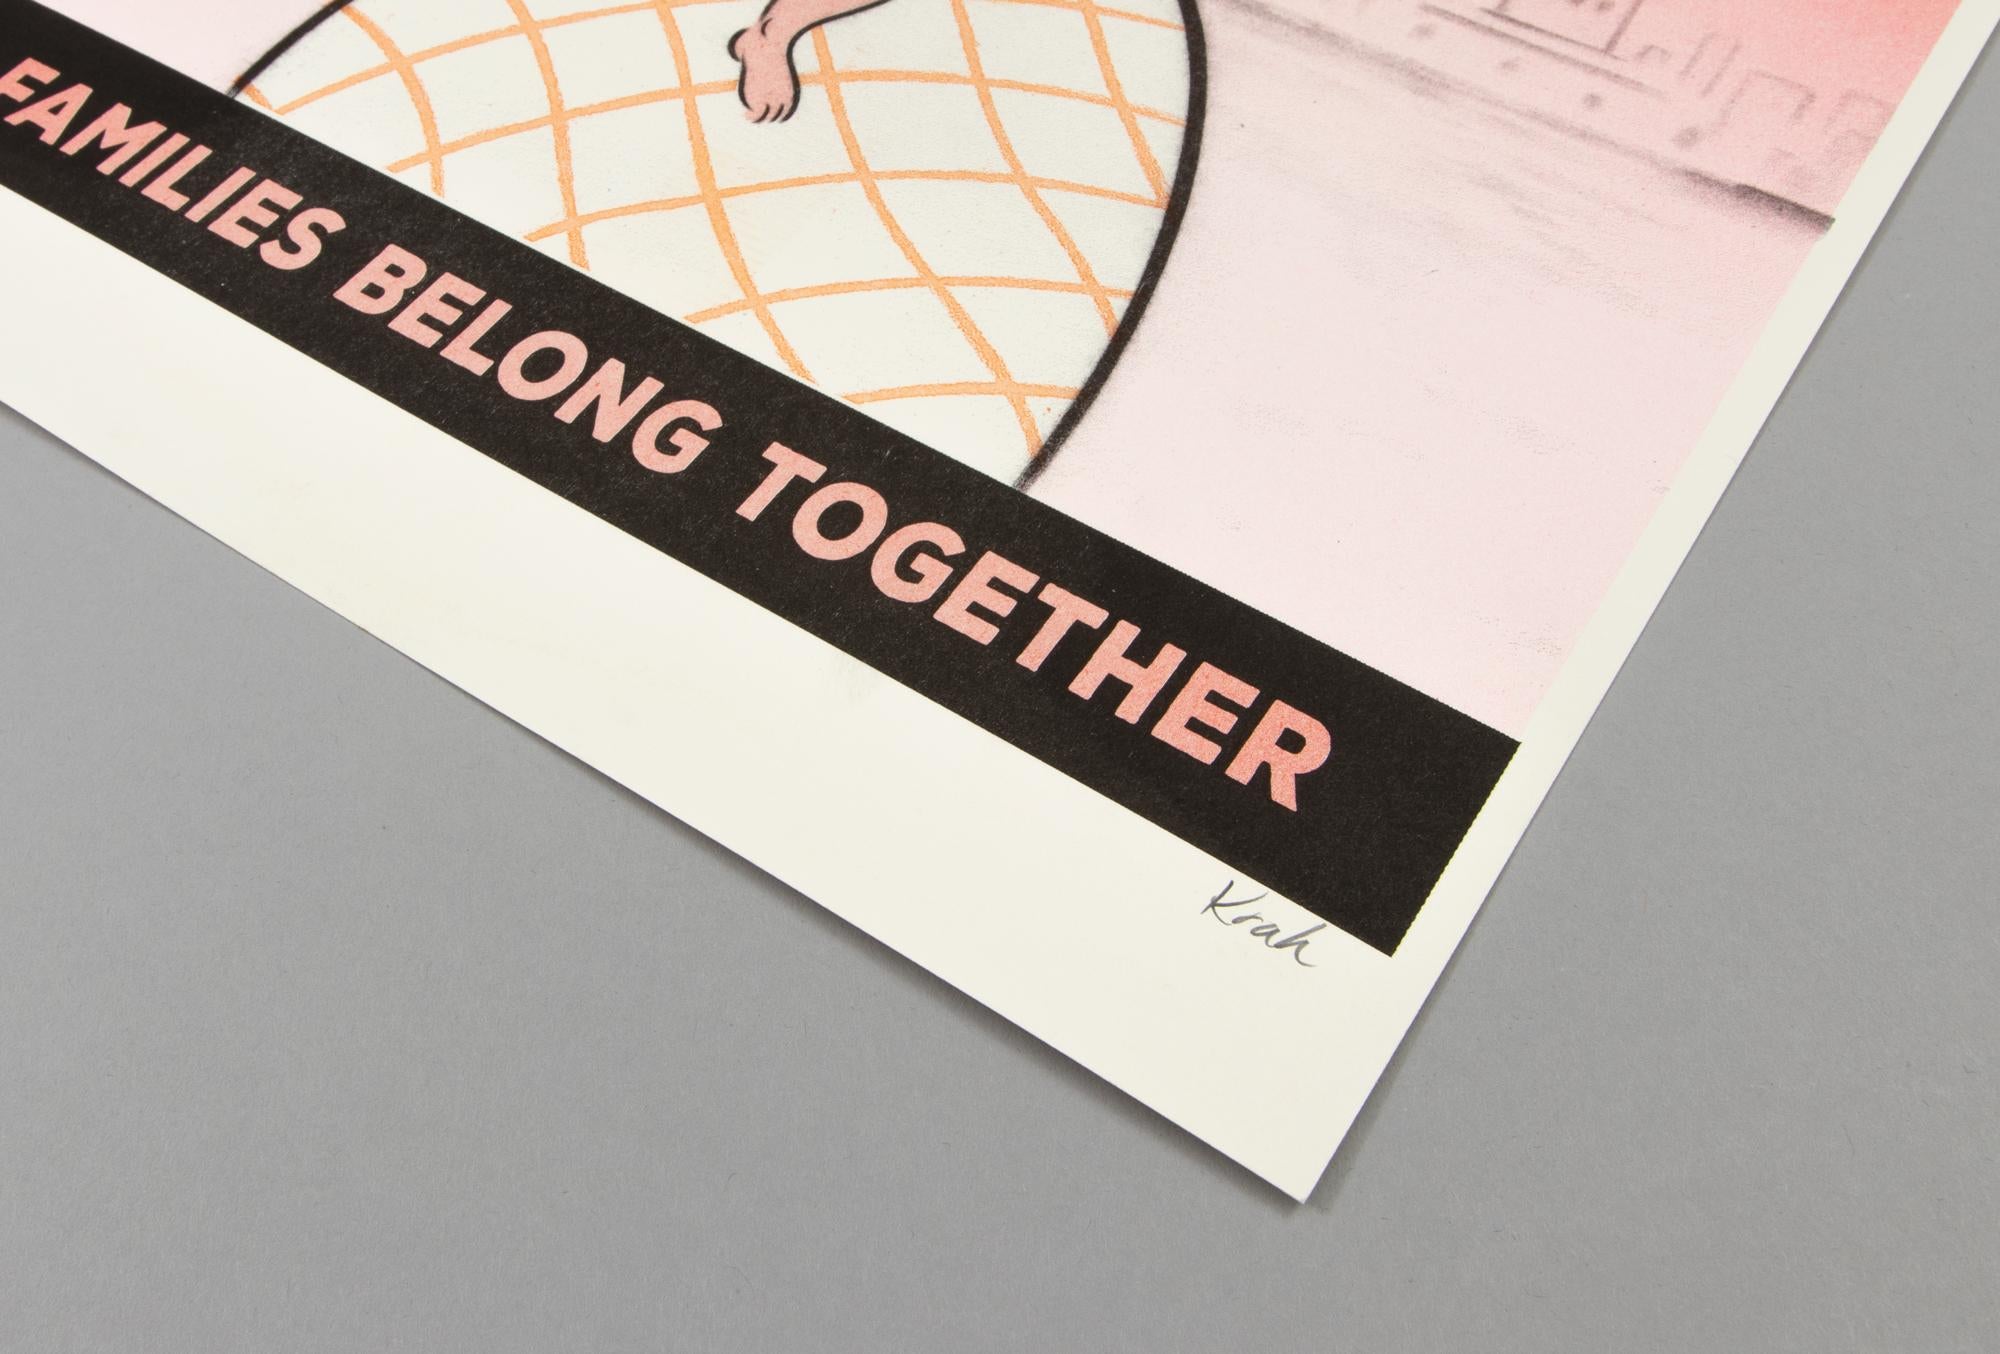 Koak, Families Belong Together - Signed Print, 2019, Contemporary Art 1